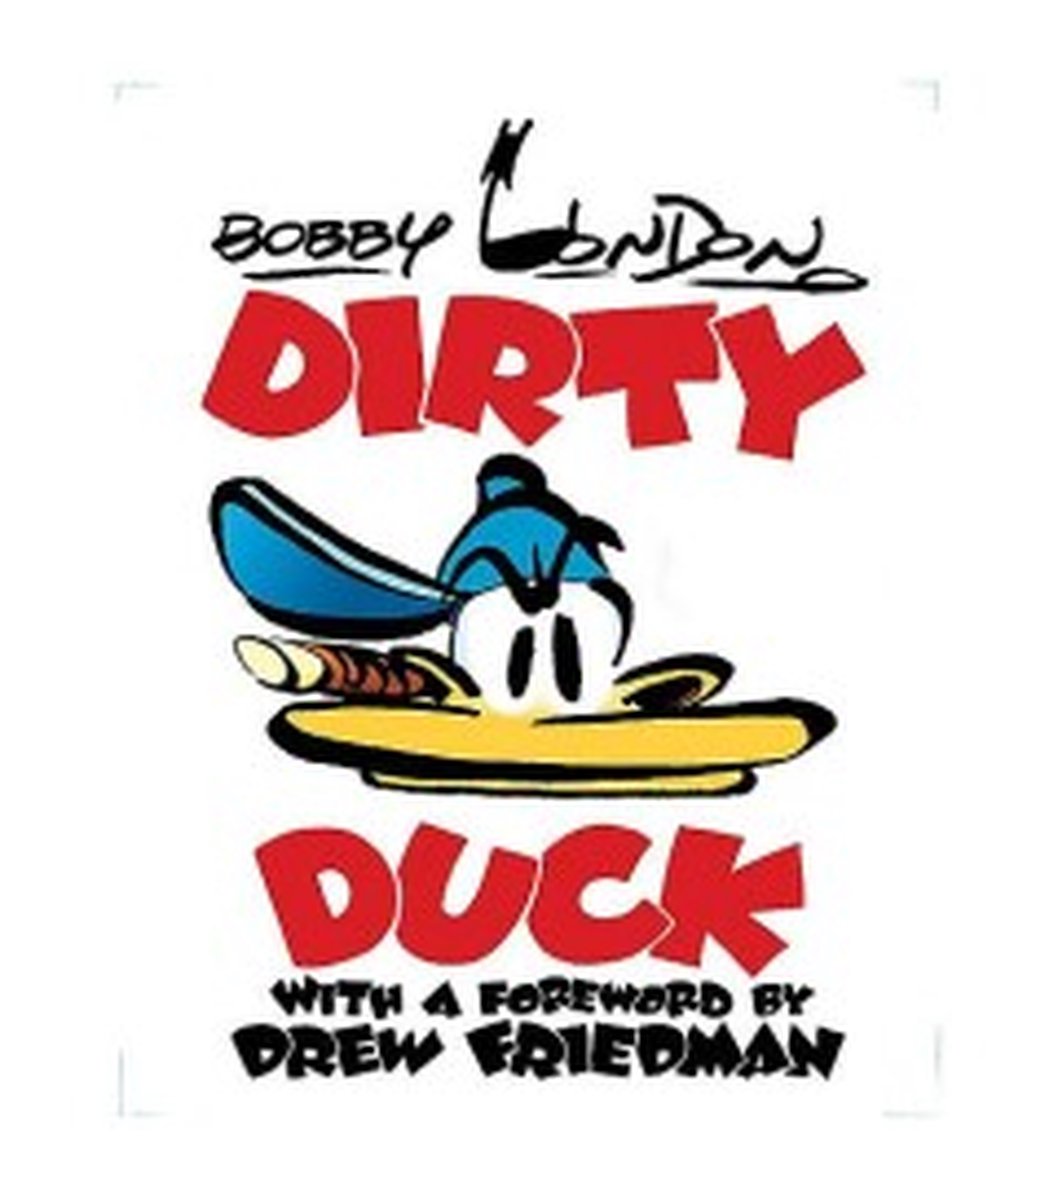 Dirty duck